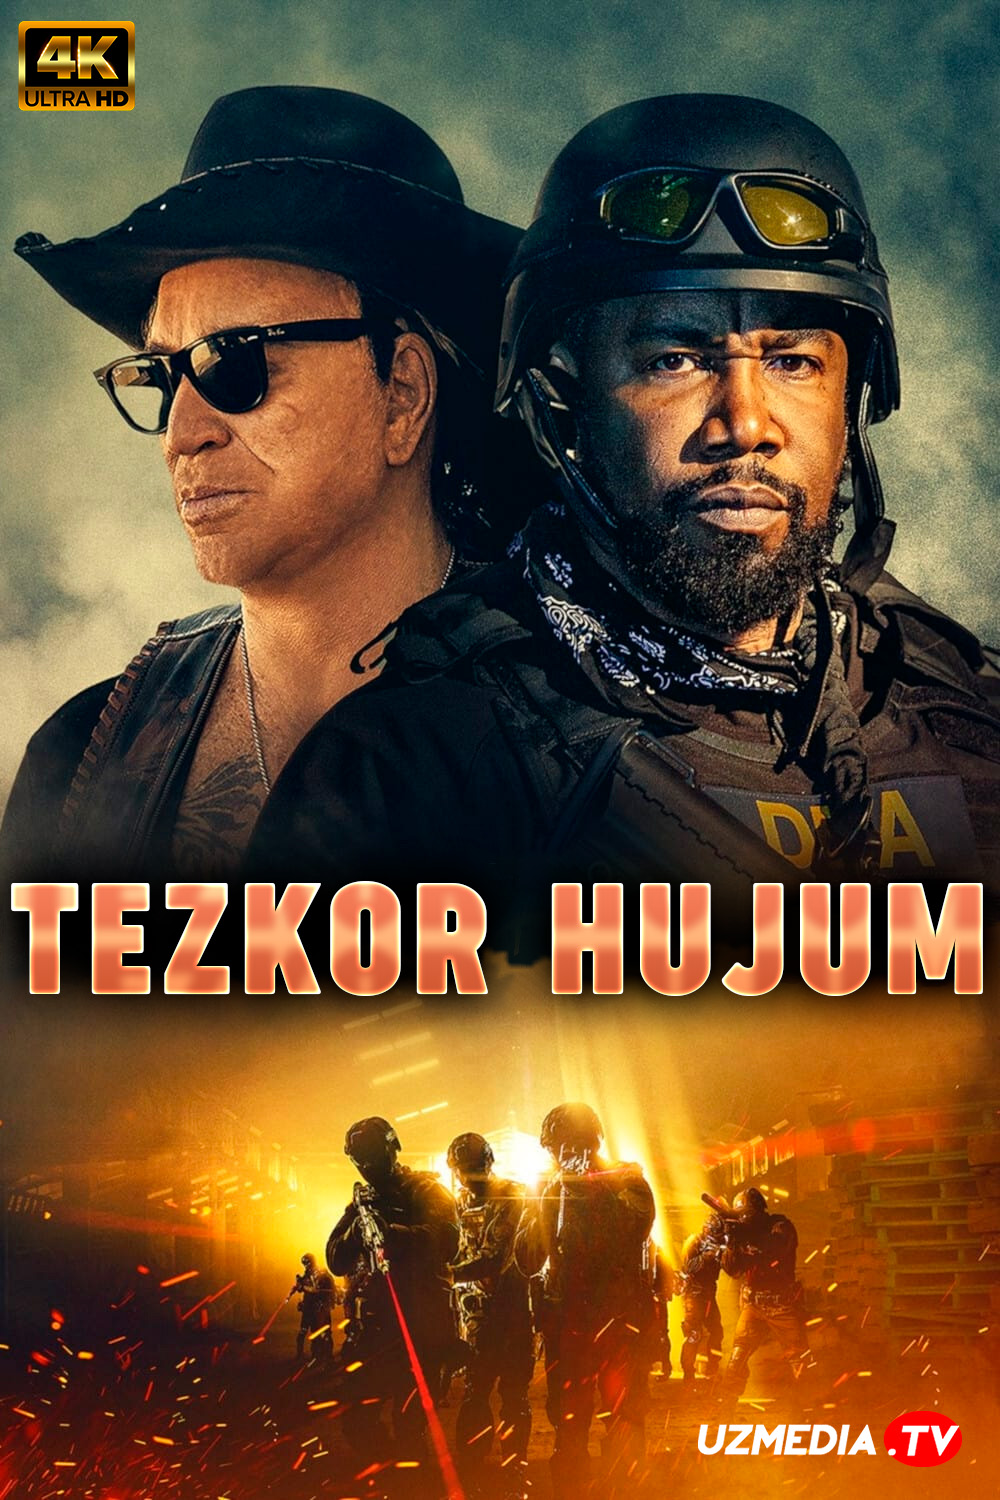 Tezkor hujum Premyera Boyevik film Uzbek tilida O'zbekcha tarjima kino 2022 4K Ultra UHD skachat